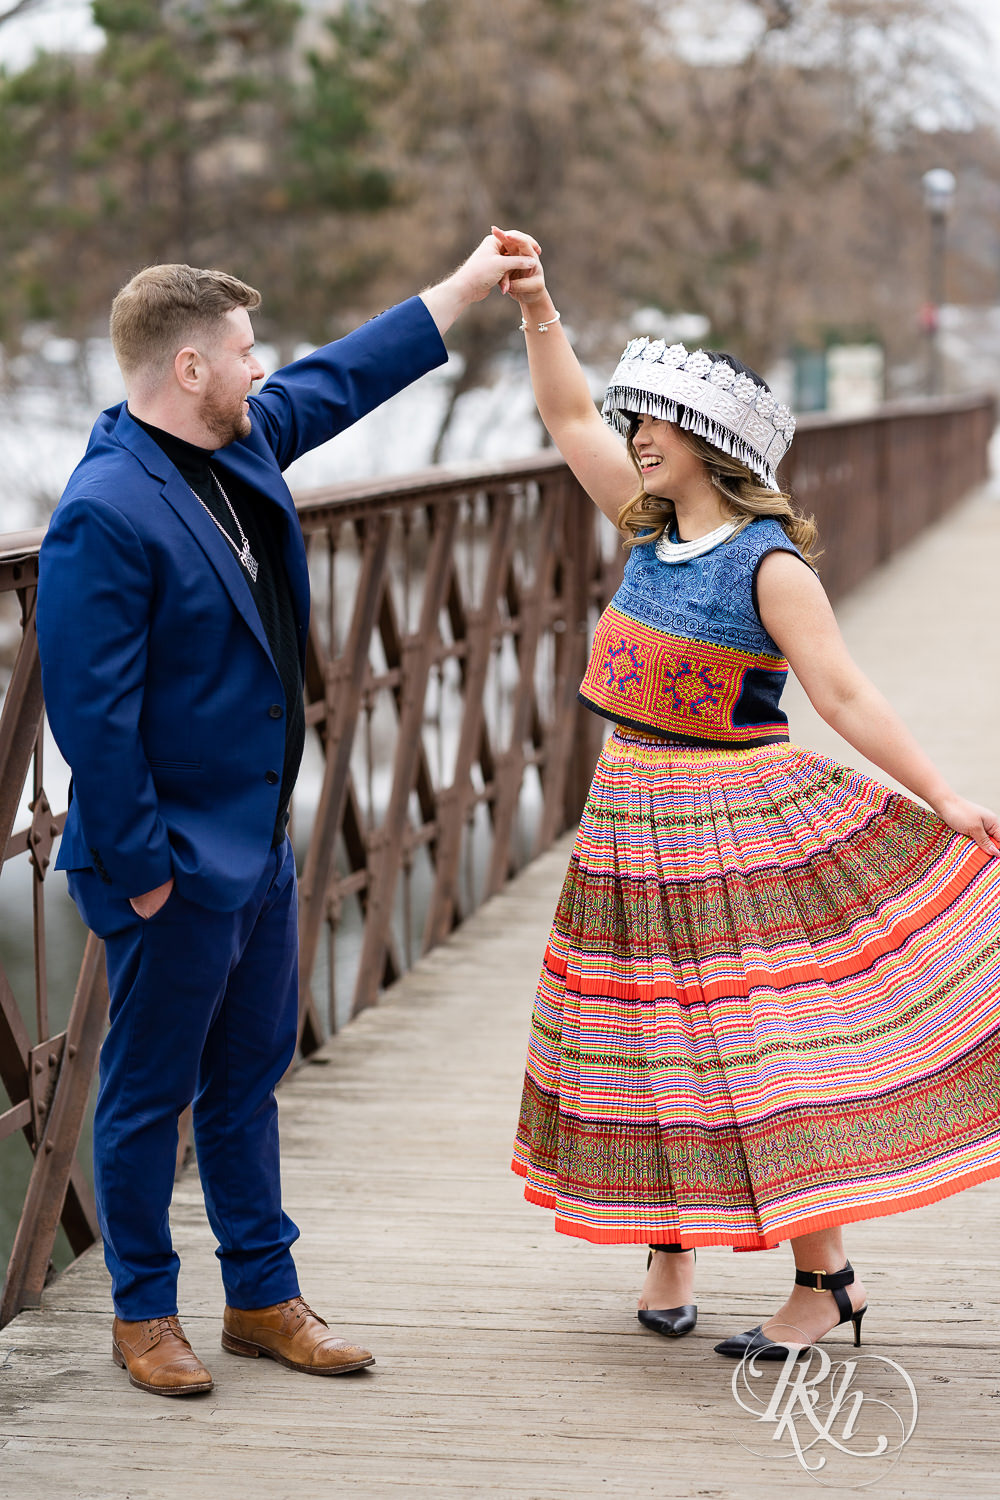 Man and Hmong woman dance on bridge in Saint Anthony Main in Minneapolis, Minnesota.